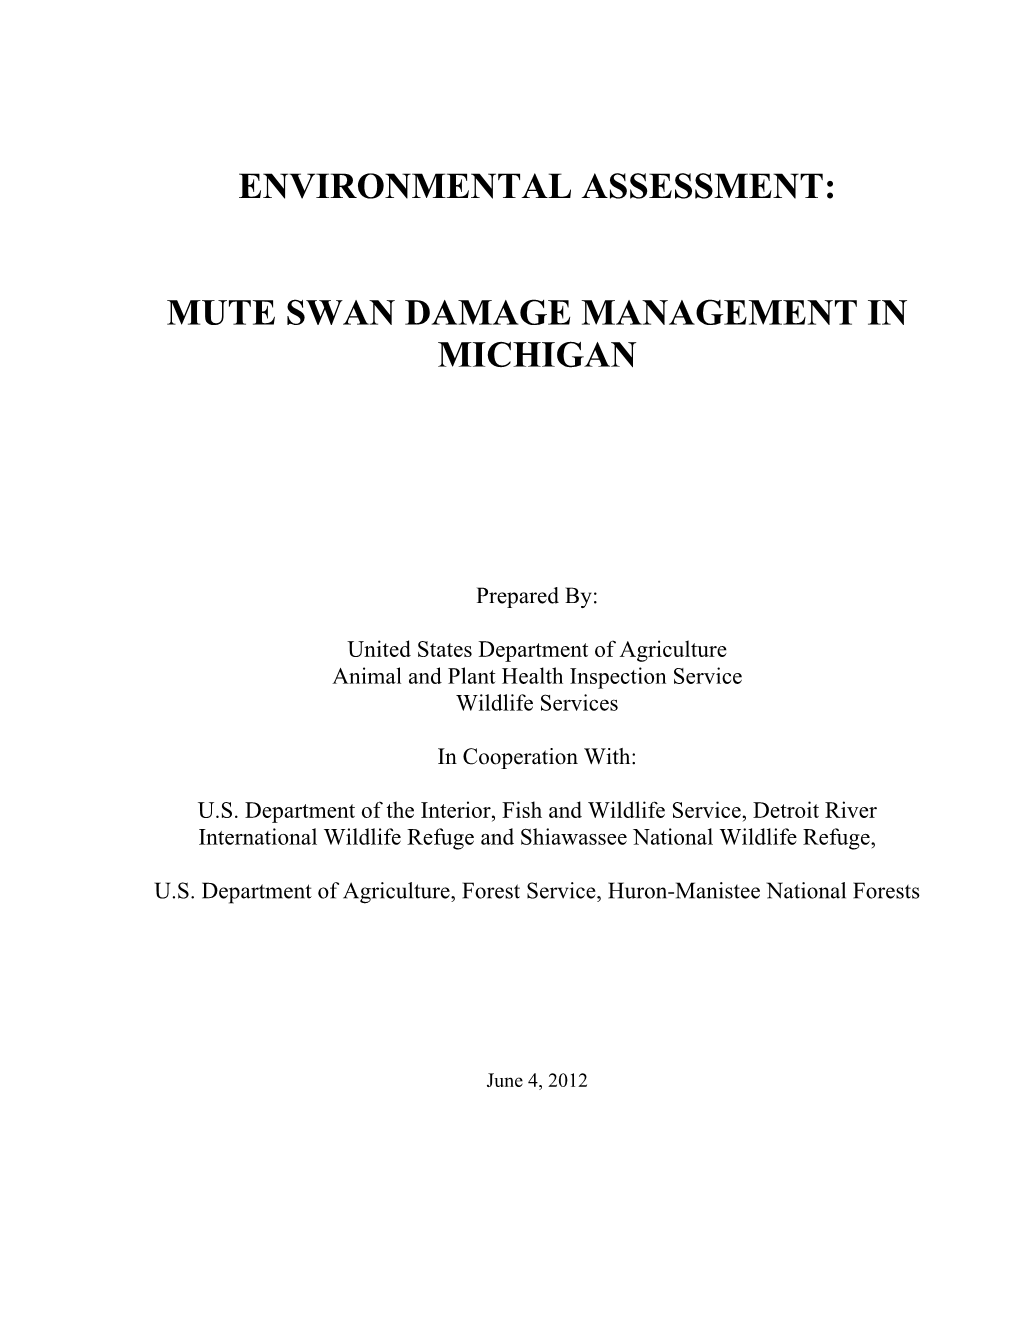 Environmental Assessment: Mute Swan Damage Management In